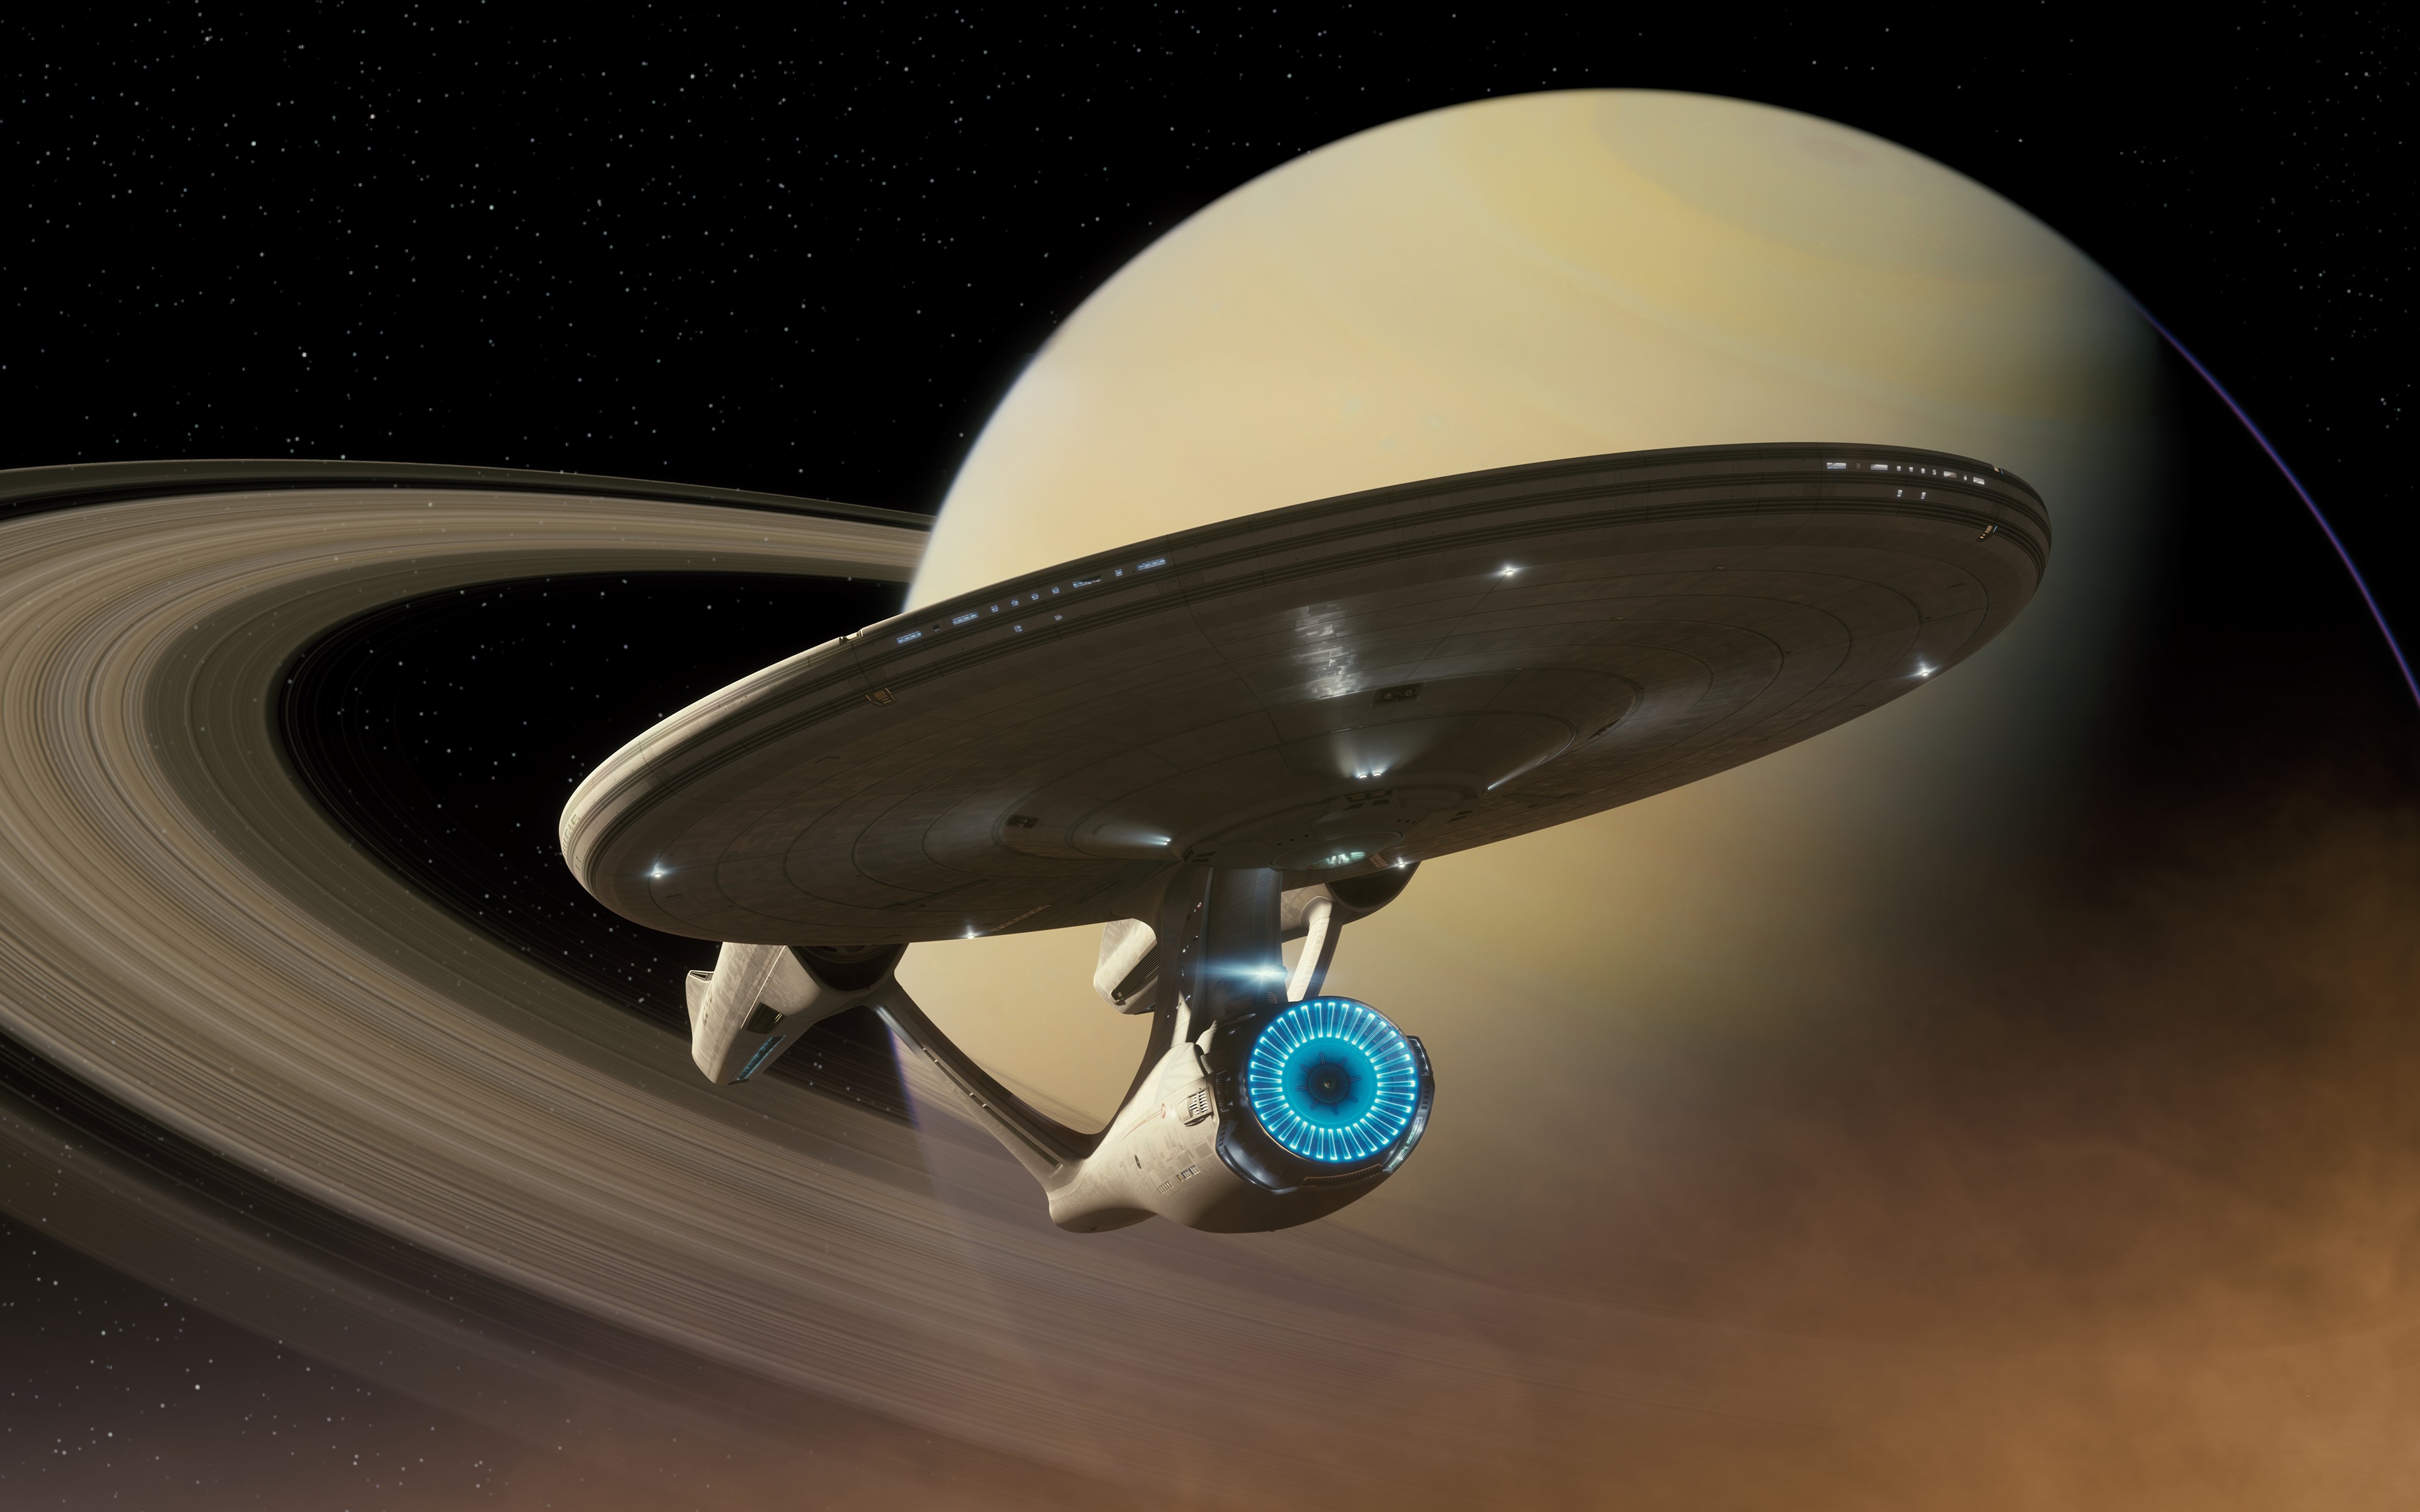 General 3840x2400 Star Trek spaceship space Saturn USS Enterprise (spaceship) Star Trek Ships digital art planet planetary rings science fiction